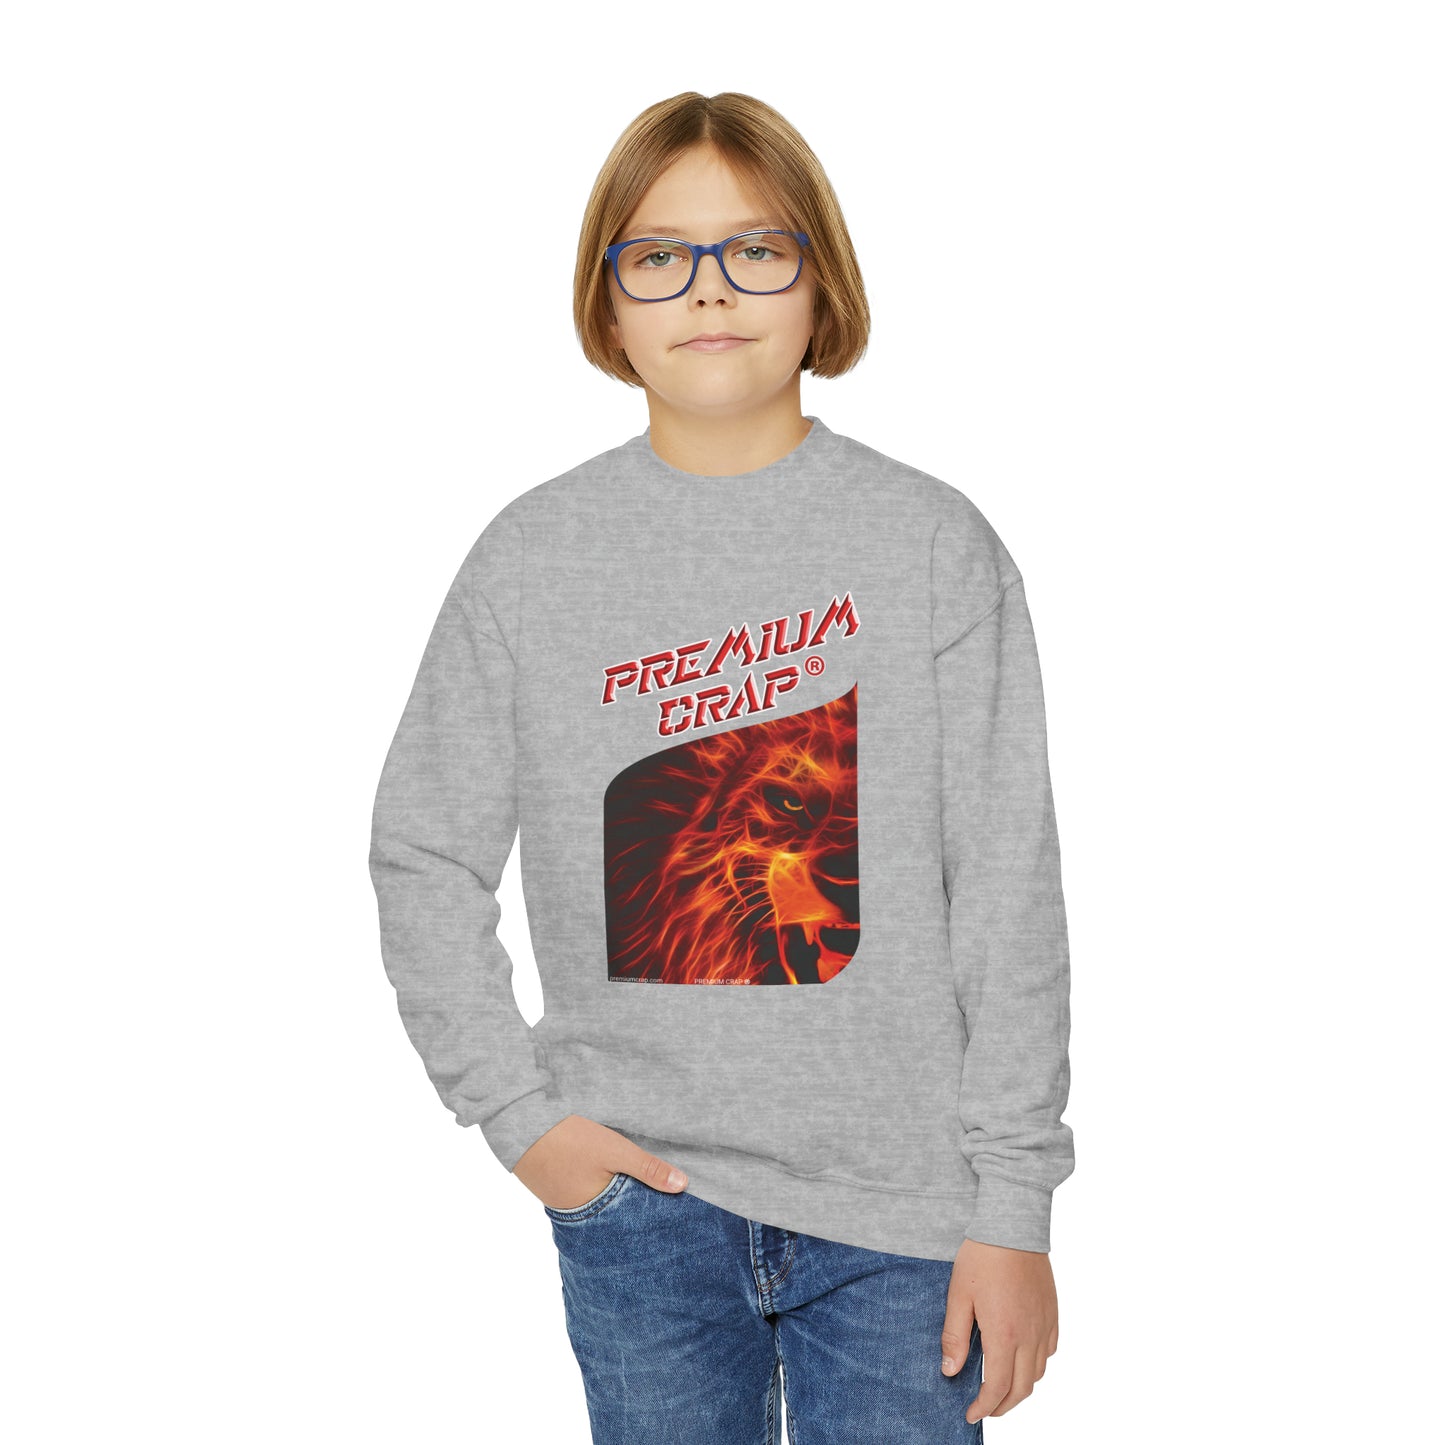 Premium Crap Teenybopper Sweatshirt